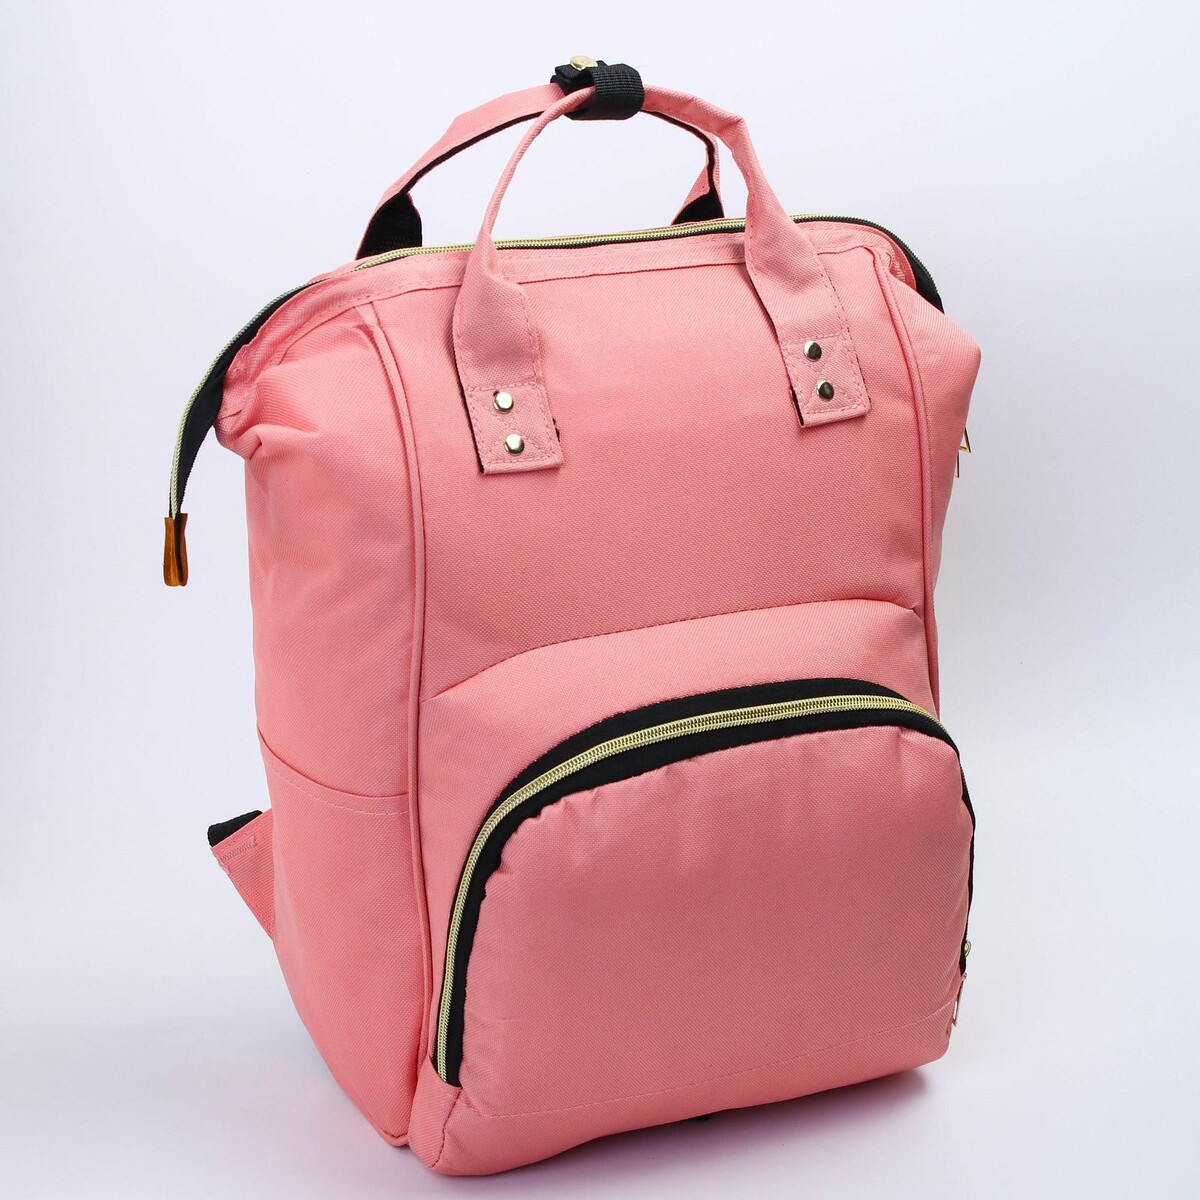 Рюкзак женский с термокарманом, термосумка - портфель, цвет розовый рюкзак женский с термокарманом термосумка портфель серый синий